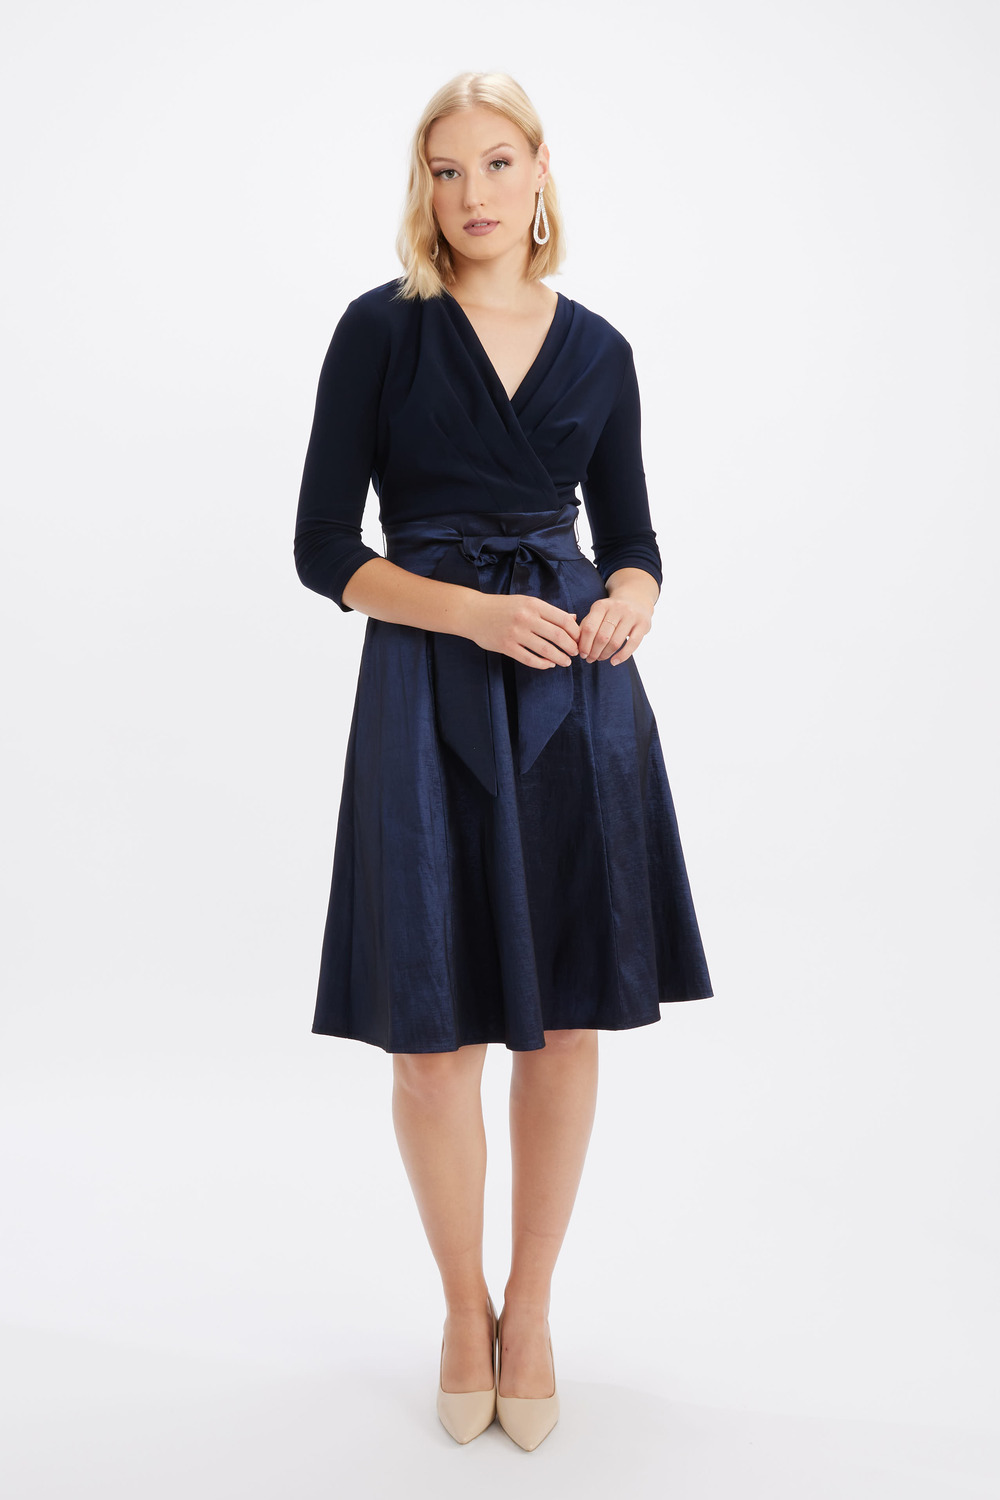 Solid & Taffeta Dress Style 233739. Midnight Blue/navy